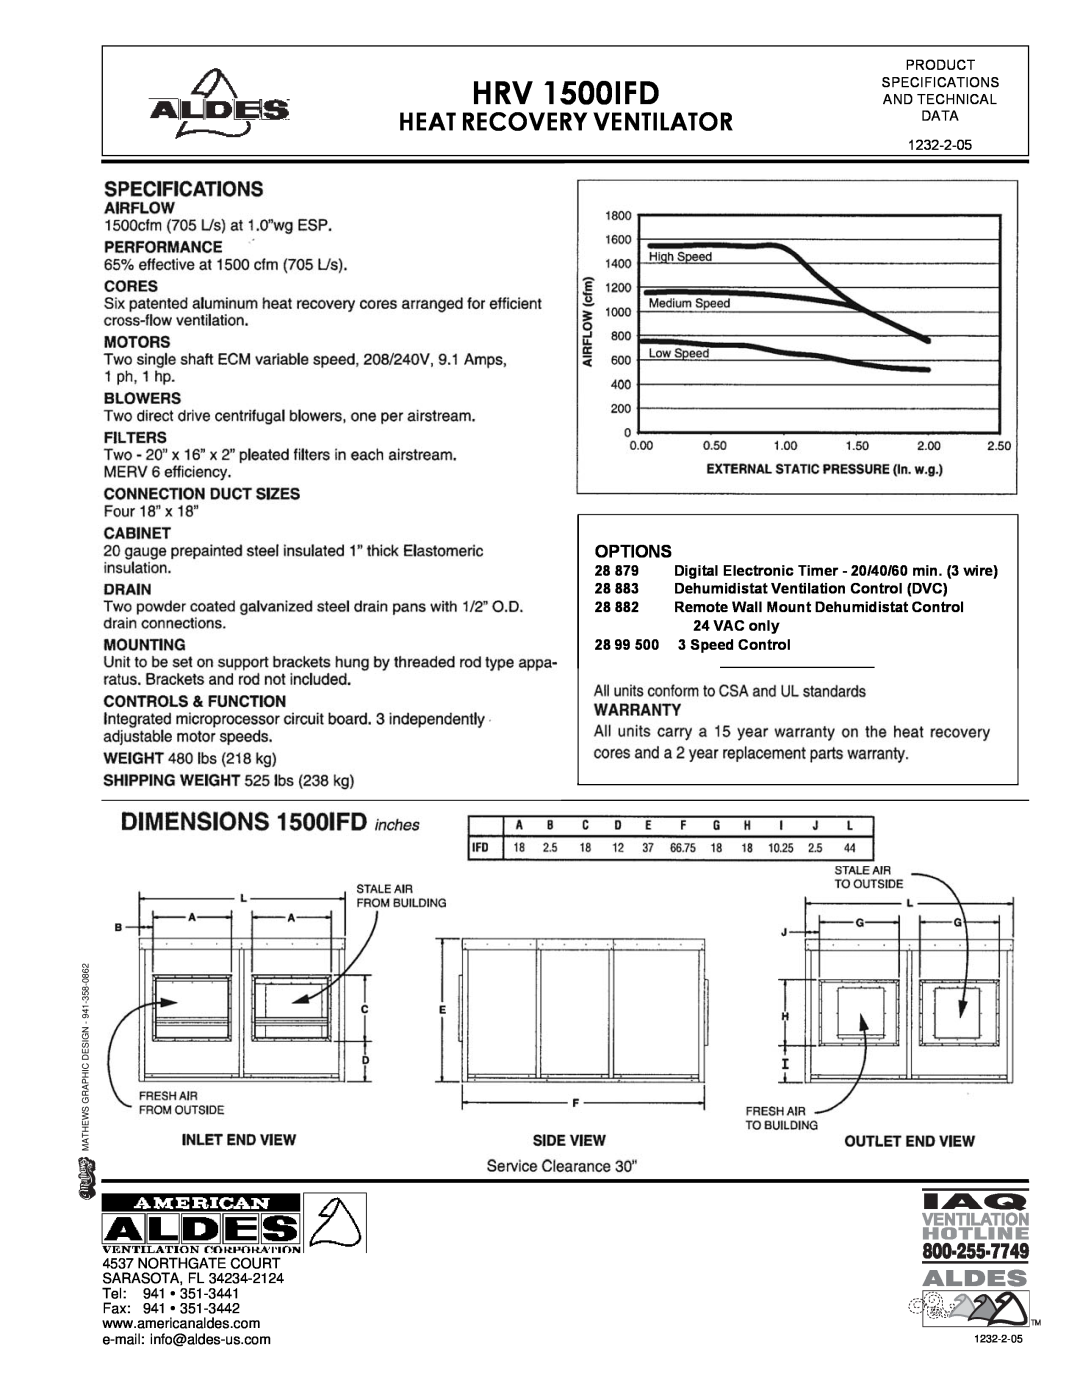 American Aldes HRV 700SFD HRV 1500IFD, Heat Recovery Ventilator, Options, 28 883 Dehumidistat Ventilation Control DVC 